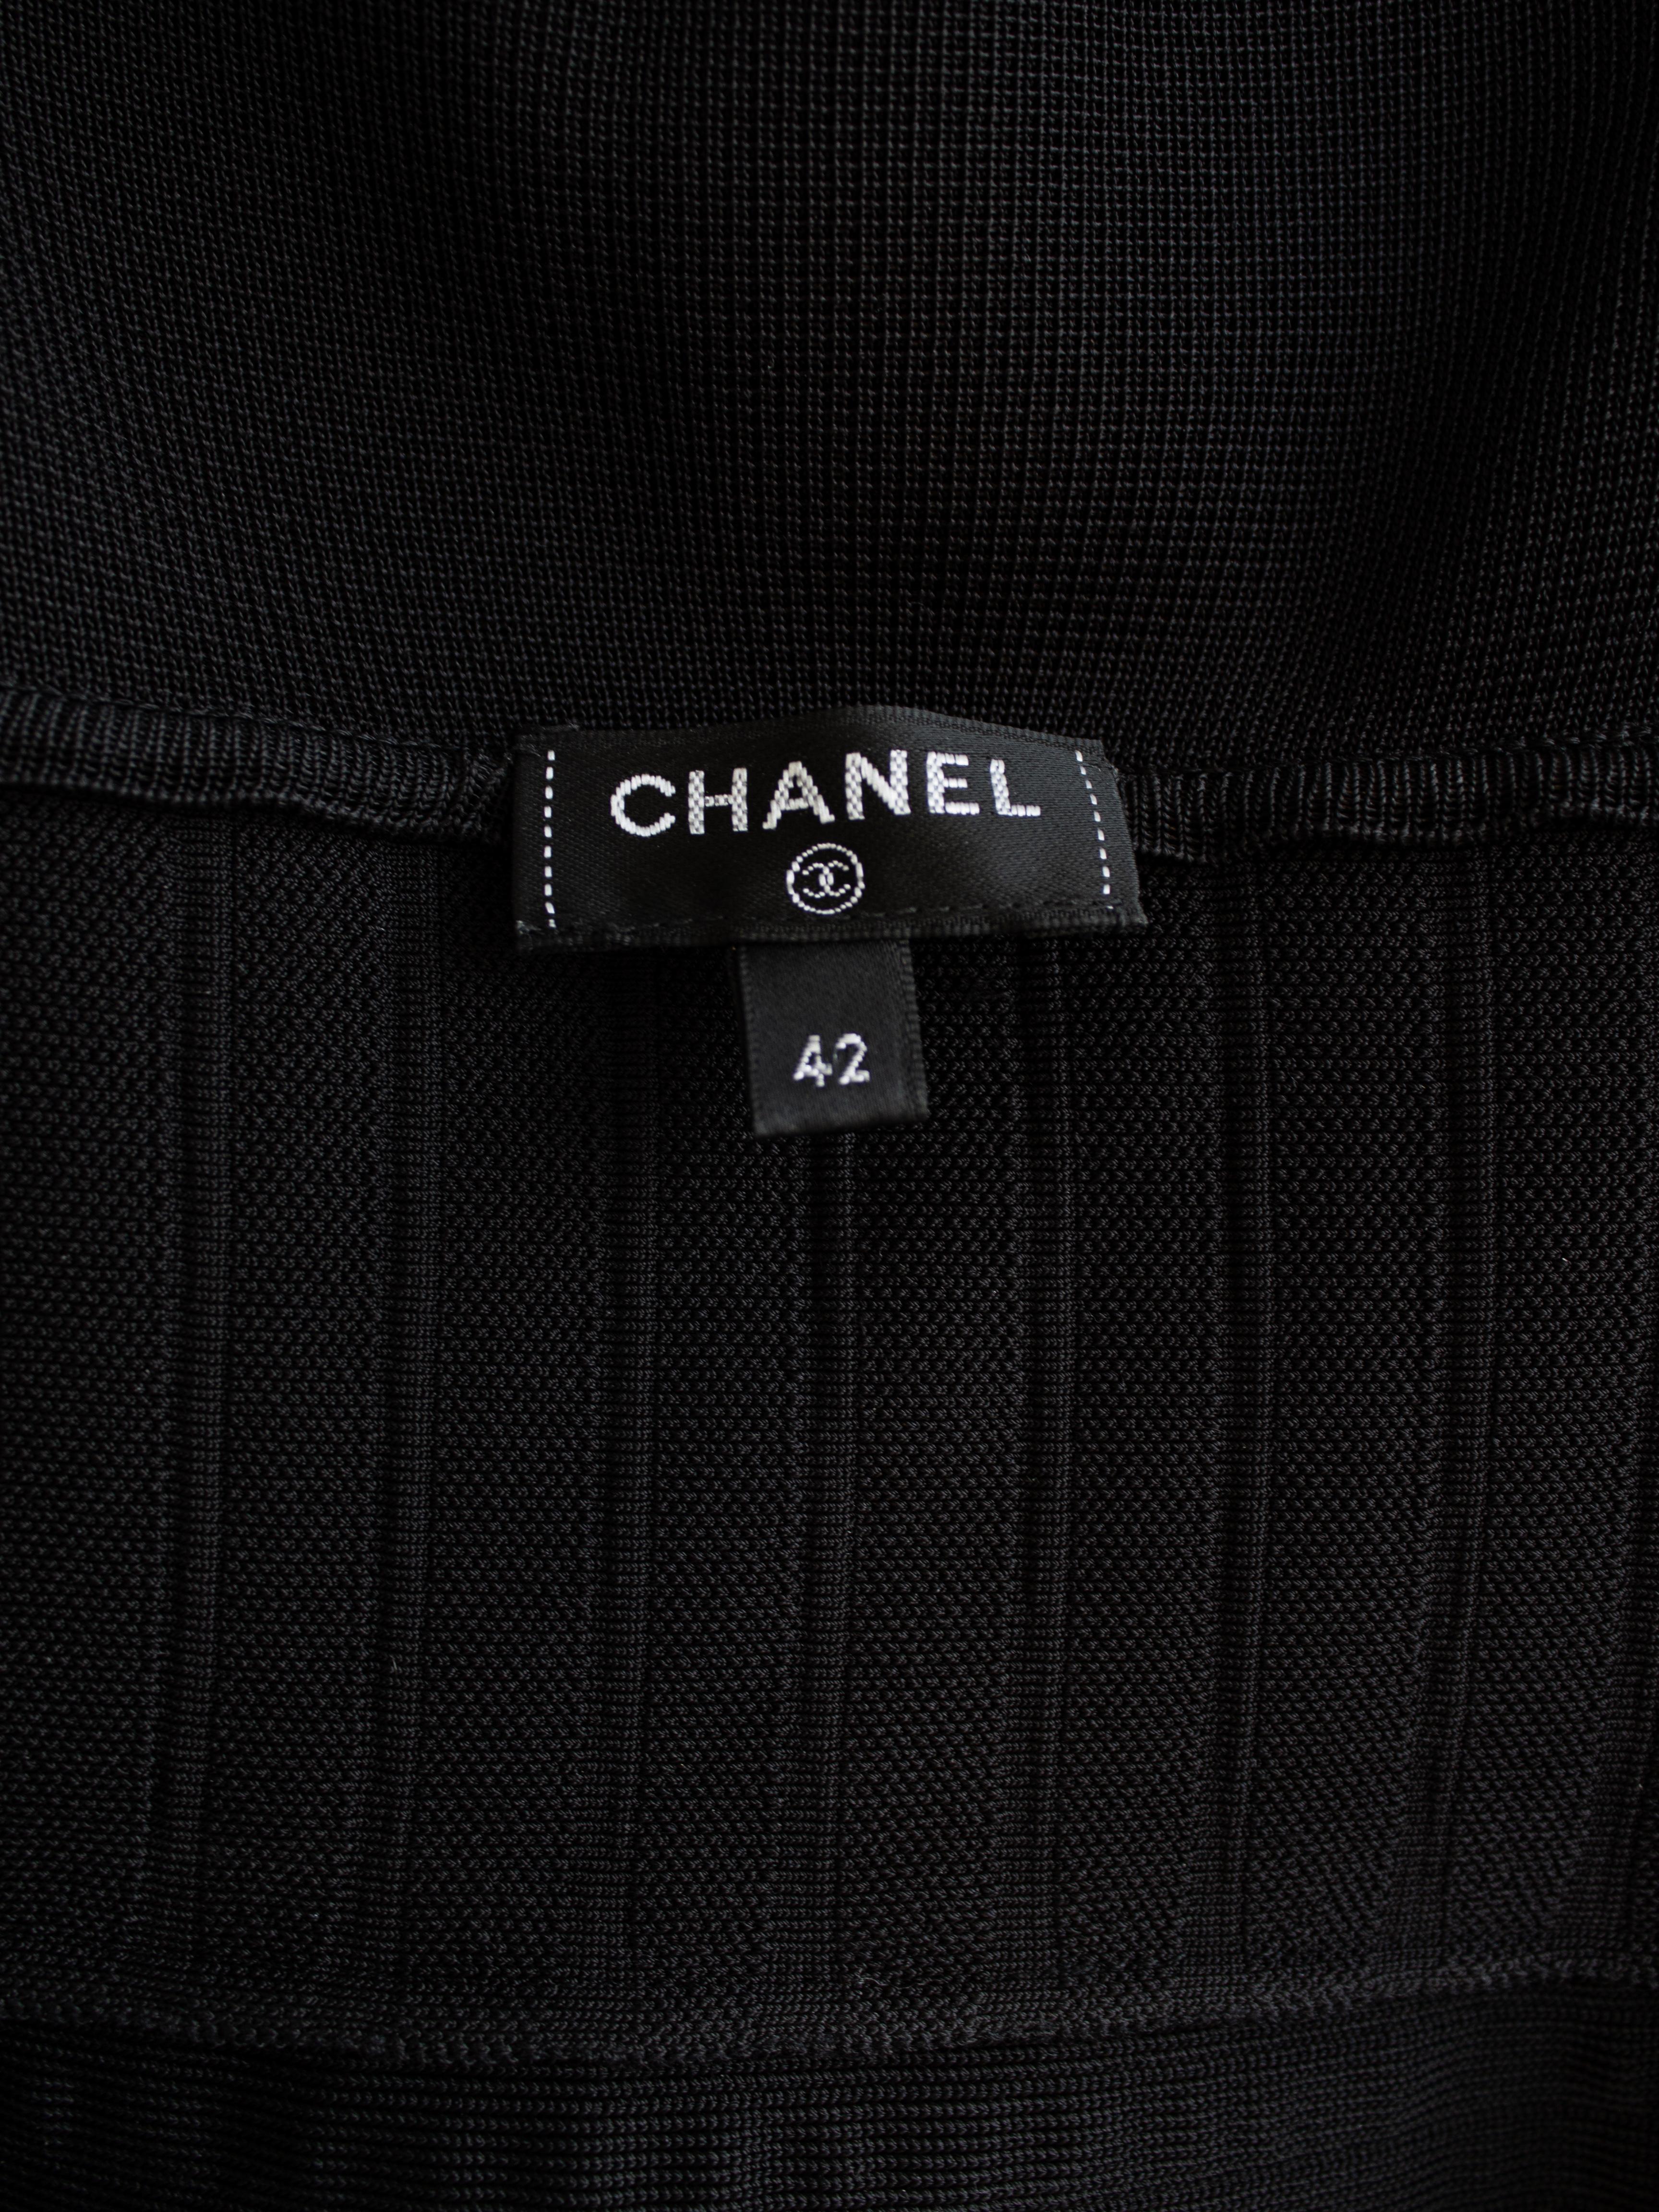 Women's Chanel S/S 2020 Black CC Crystal Logo 20P 20S Mini LBD Dress